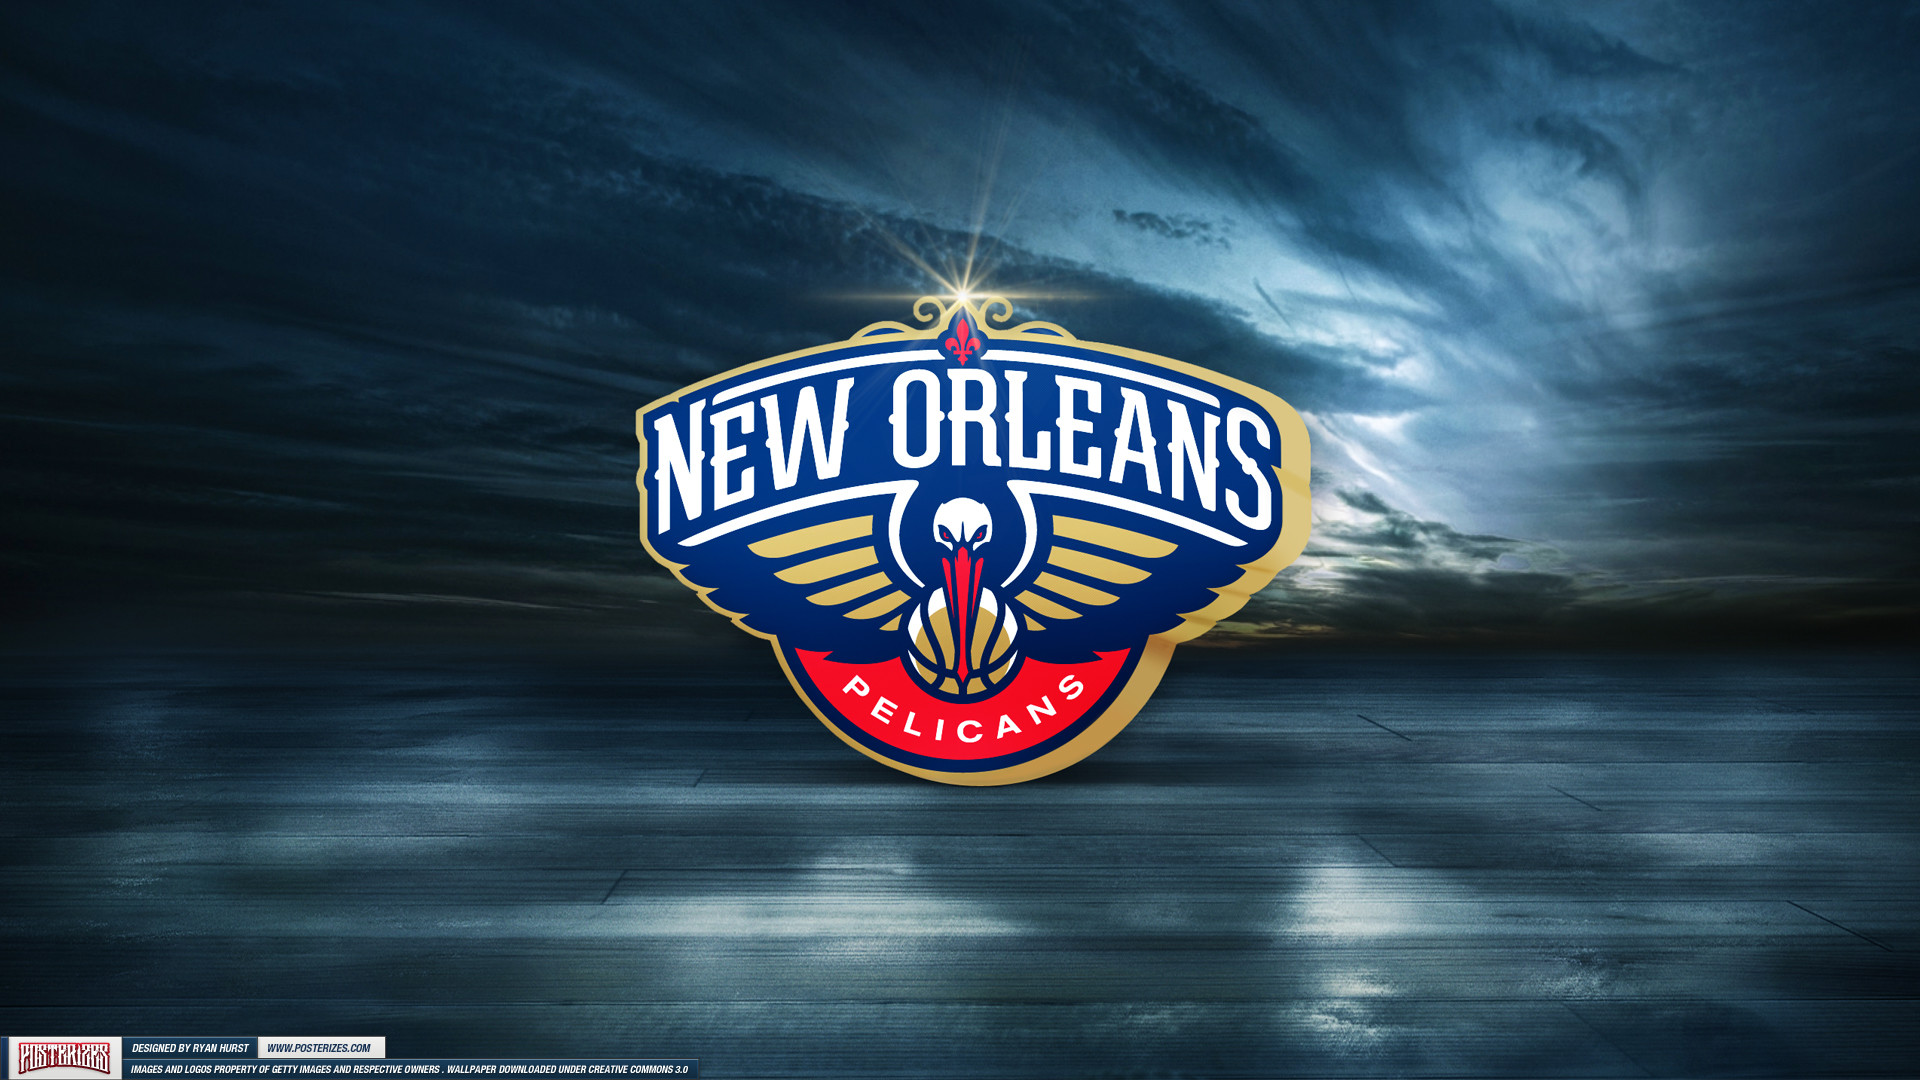 1920x1080 New Orleans Pelicans Wallpaper #1 | New Orleans Hornets/Pelicans |  Pinterest | NBA